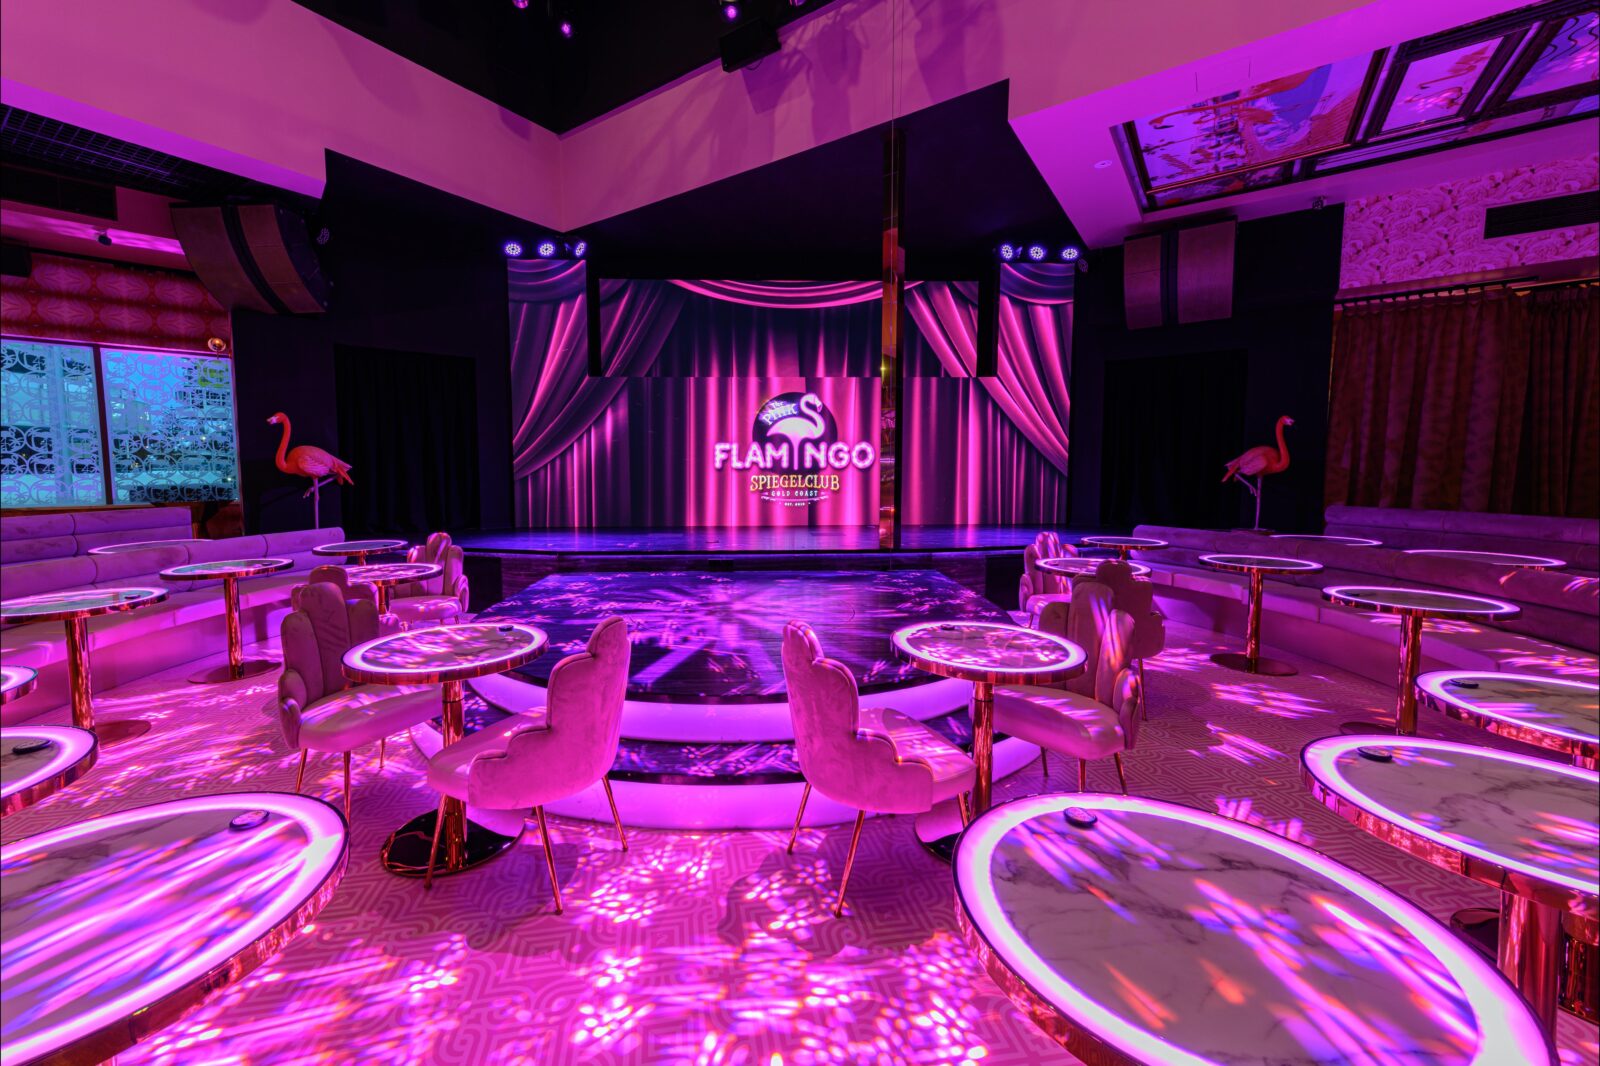 The Pink Flamingo Spiegelclub Venue